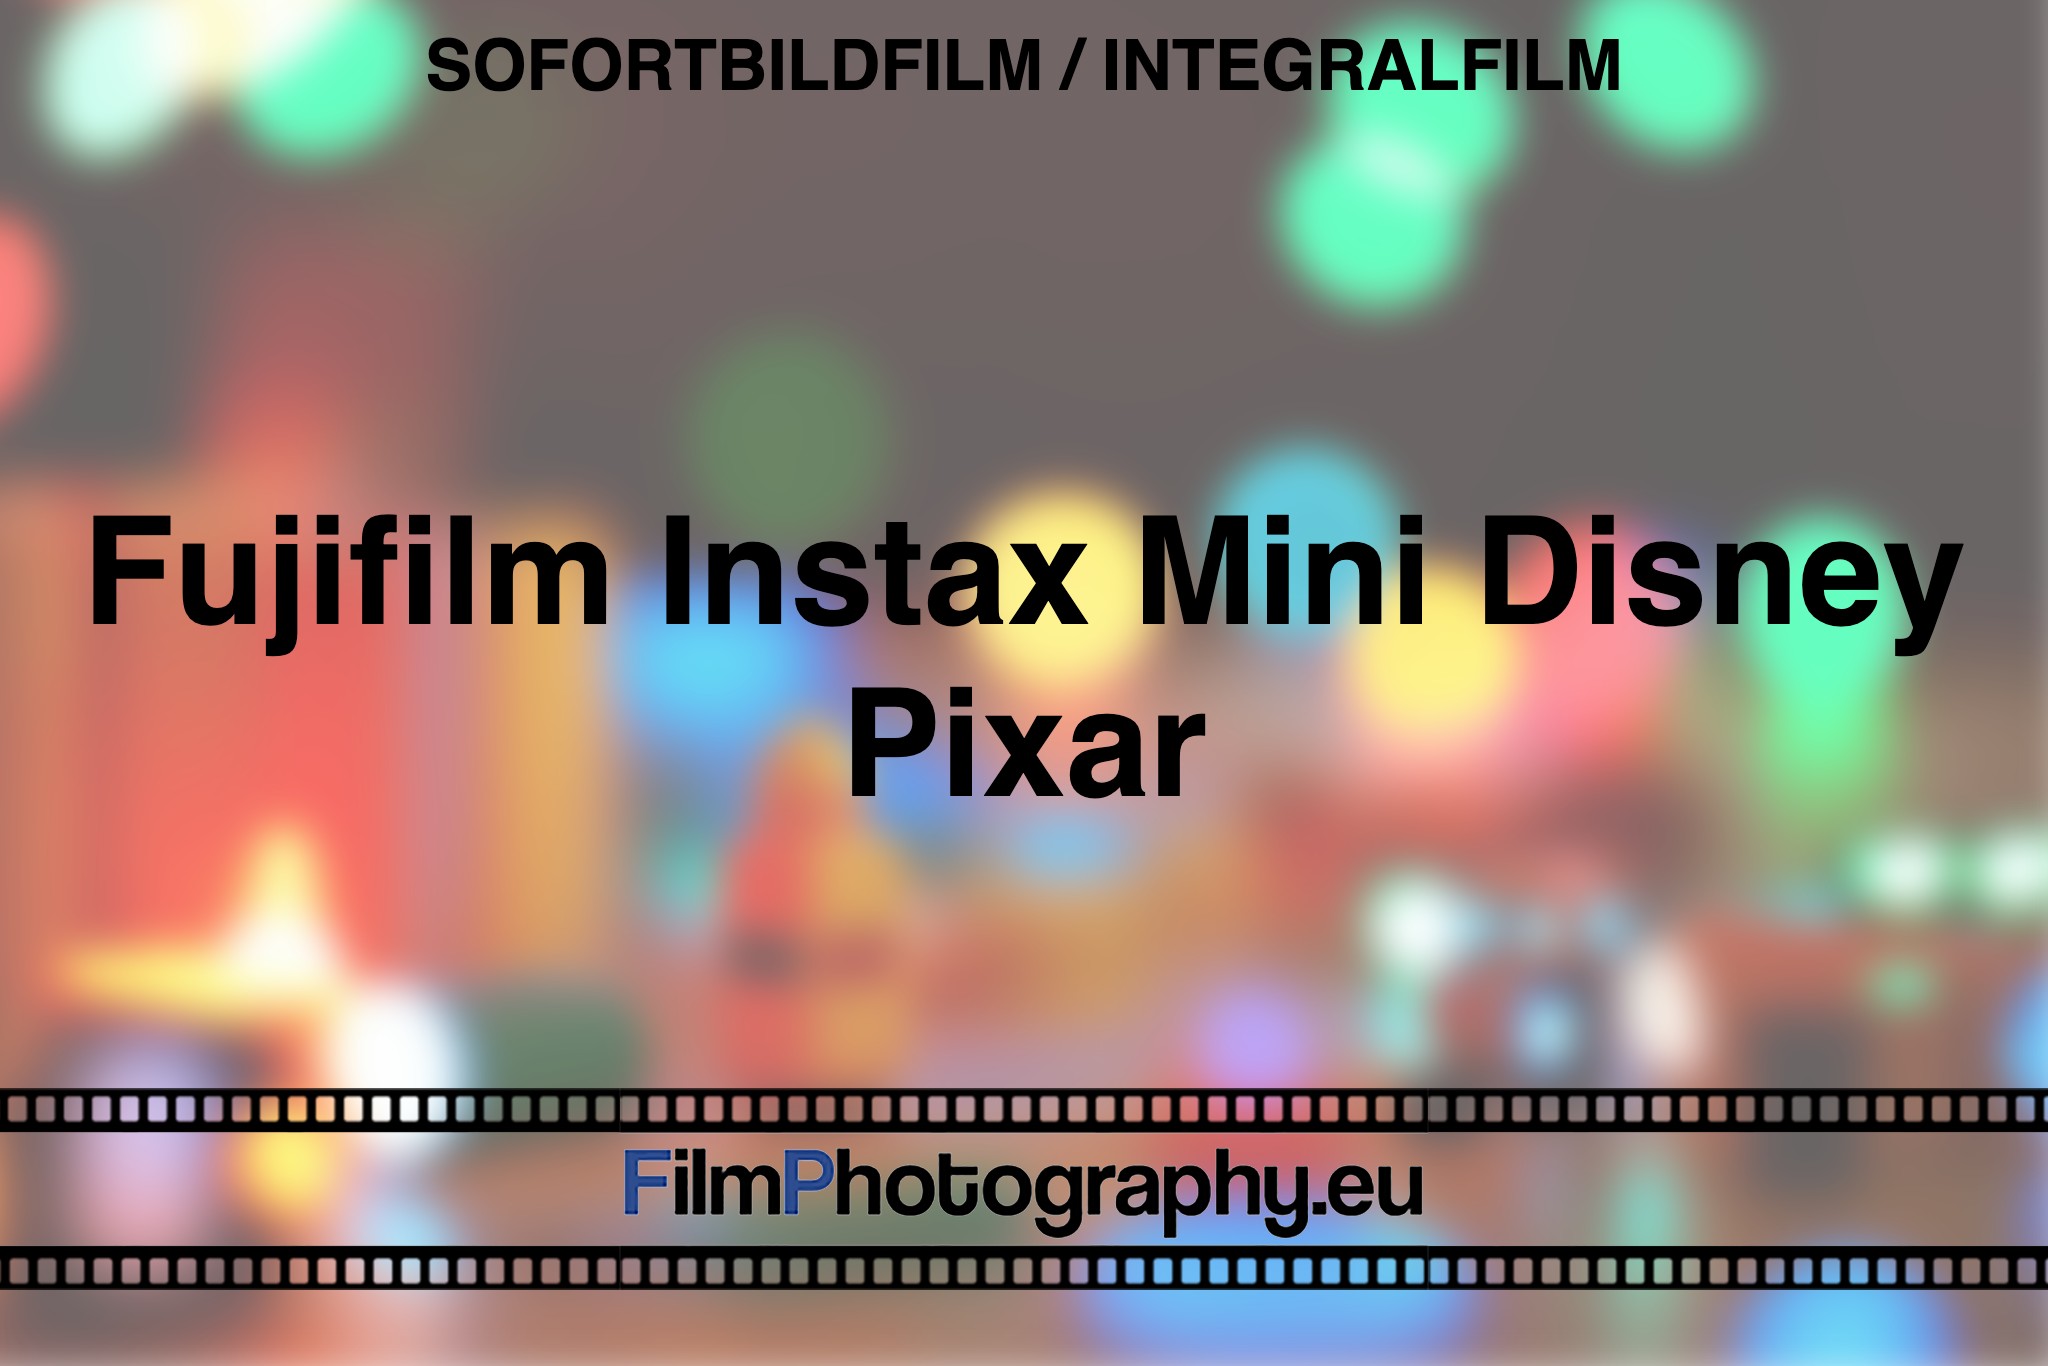 fujifilm-instax-mini-disney-pixar-sofortbildfilm-integralfilm-fp-bnv